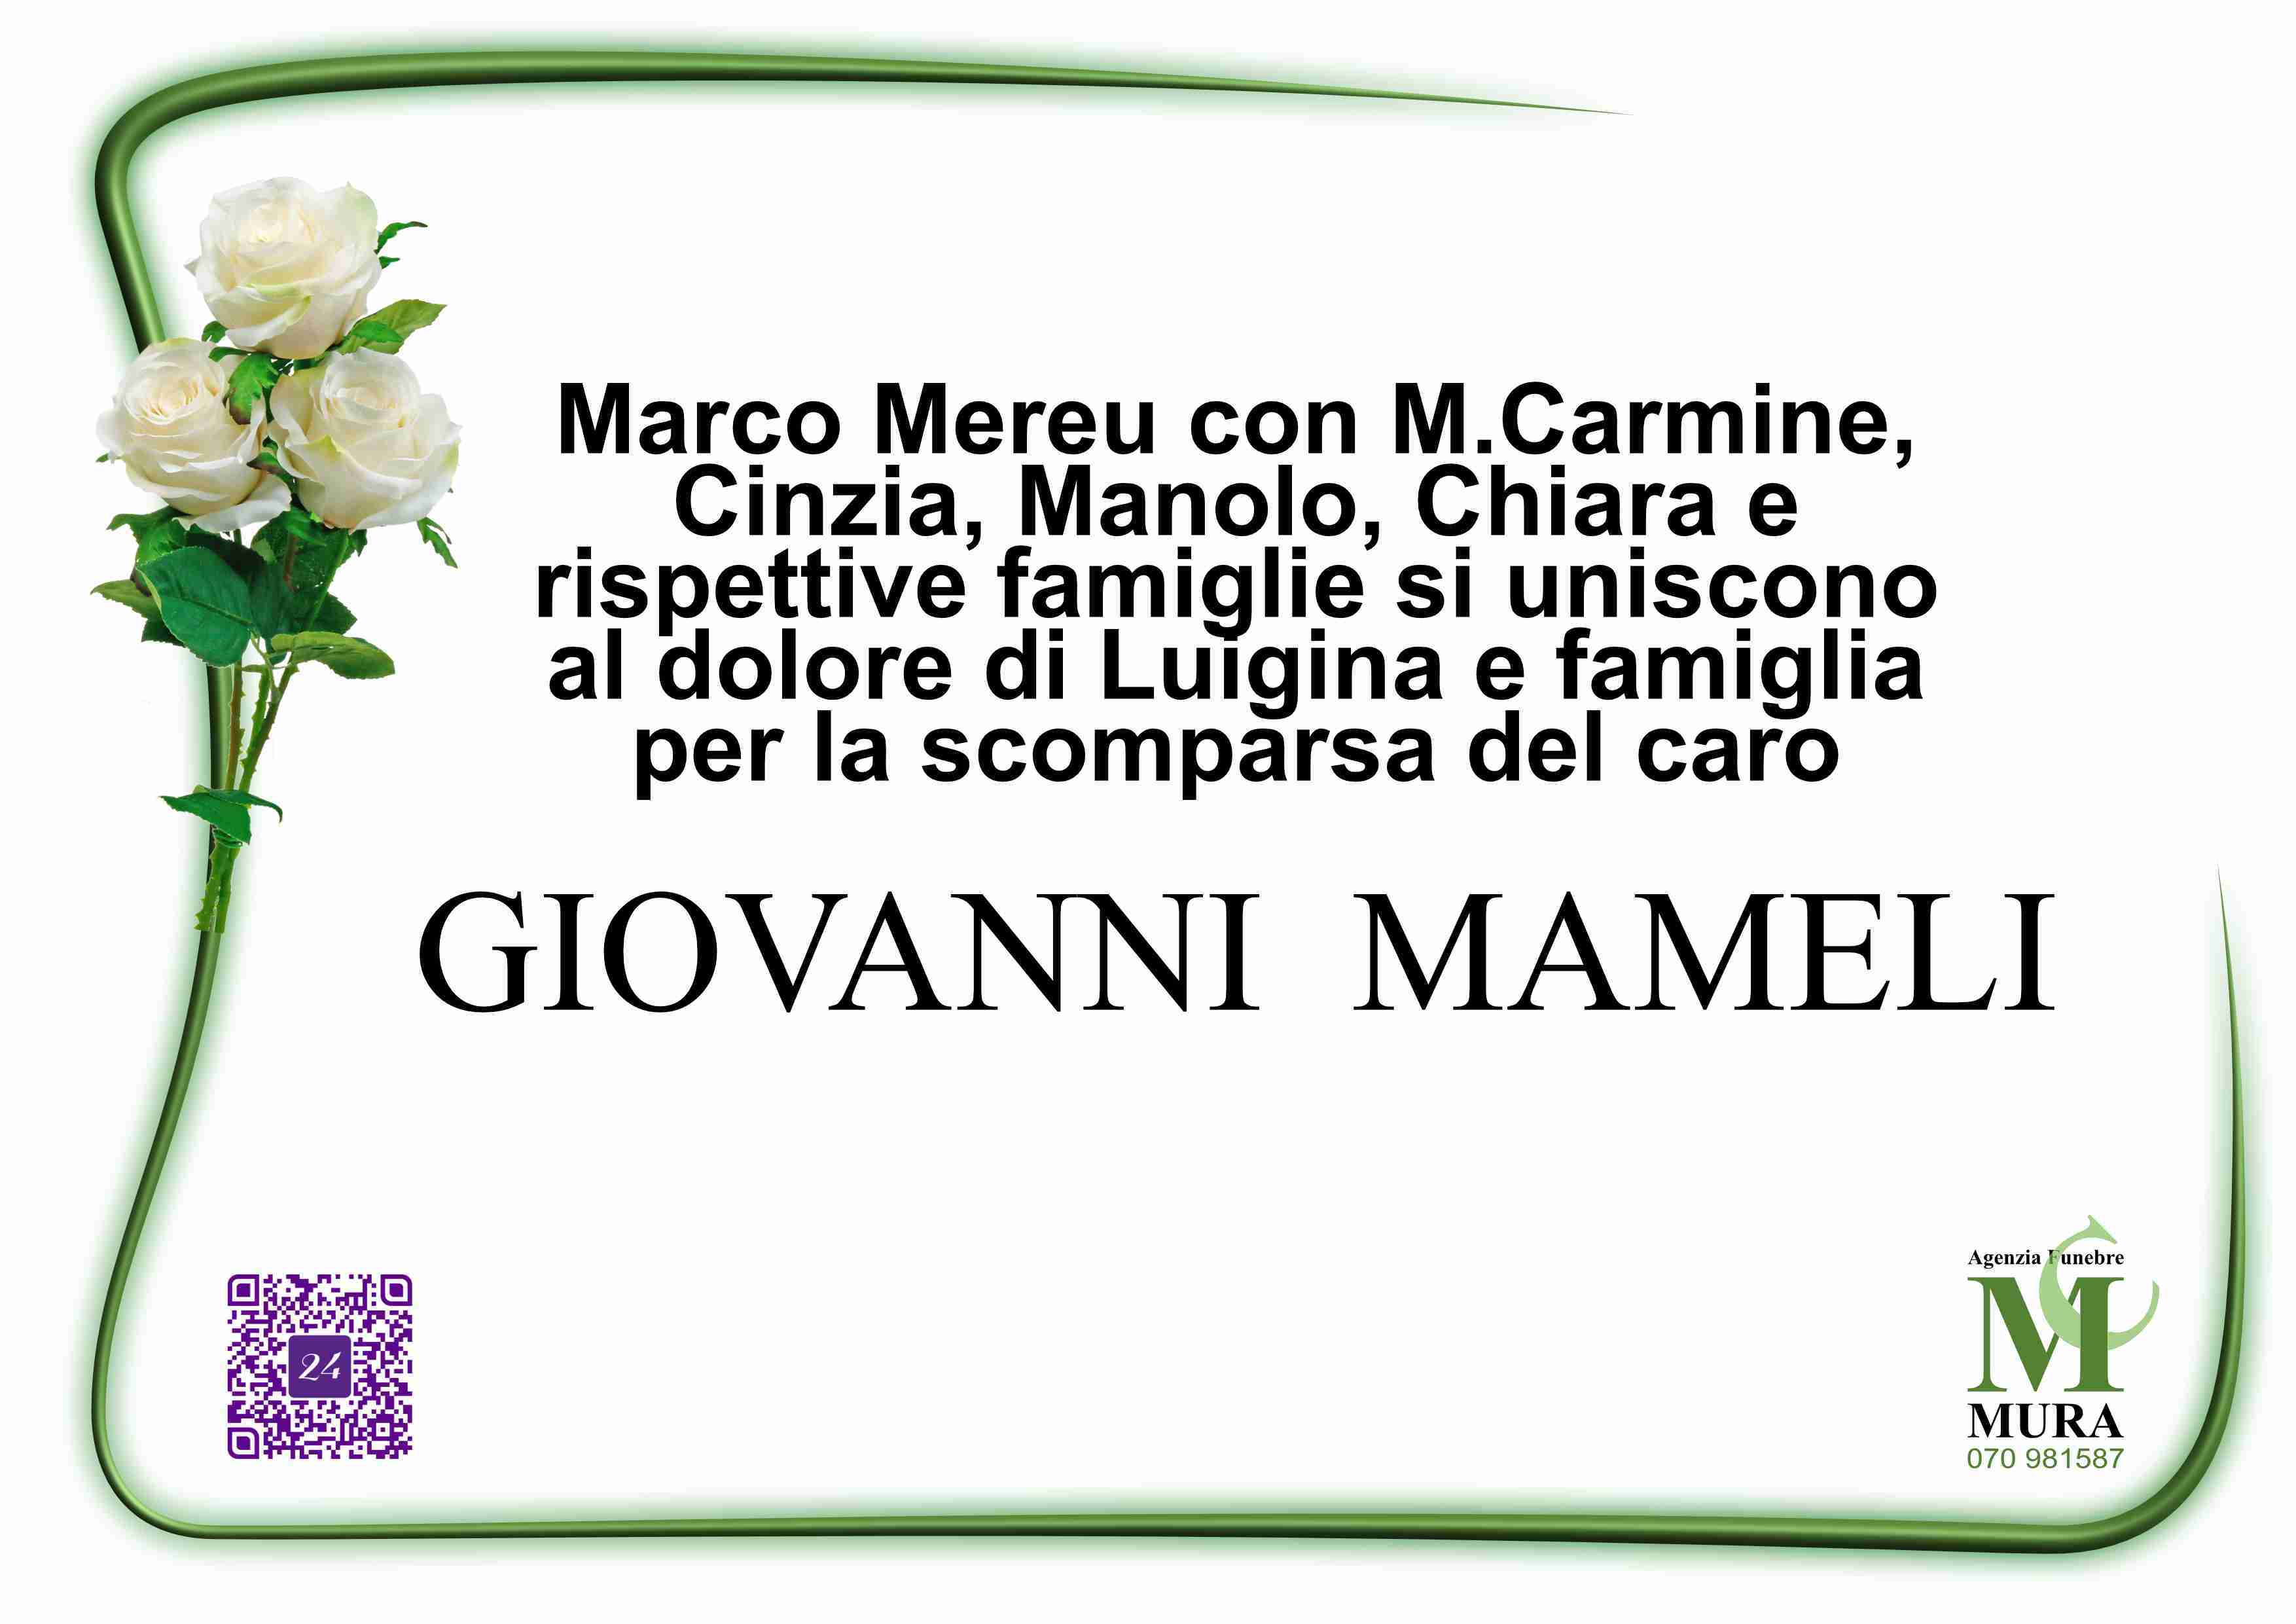 Giovanni Mameli